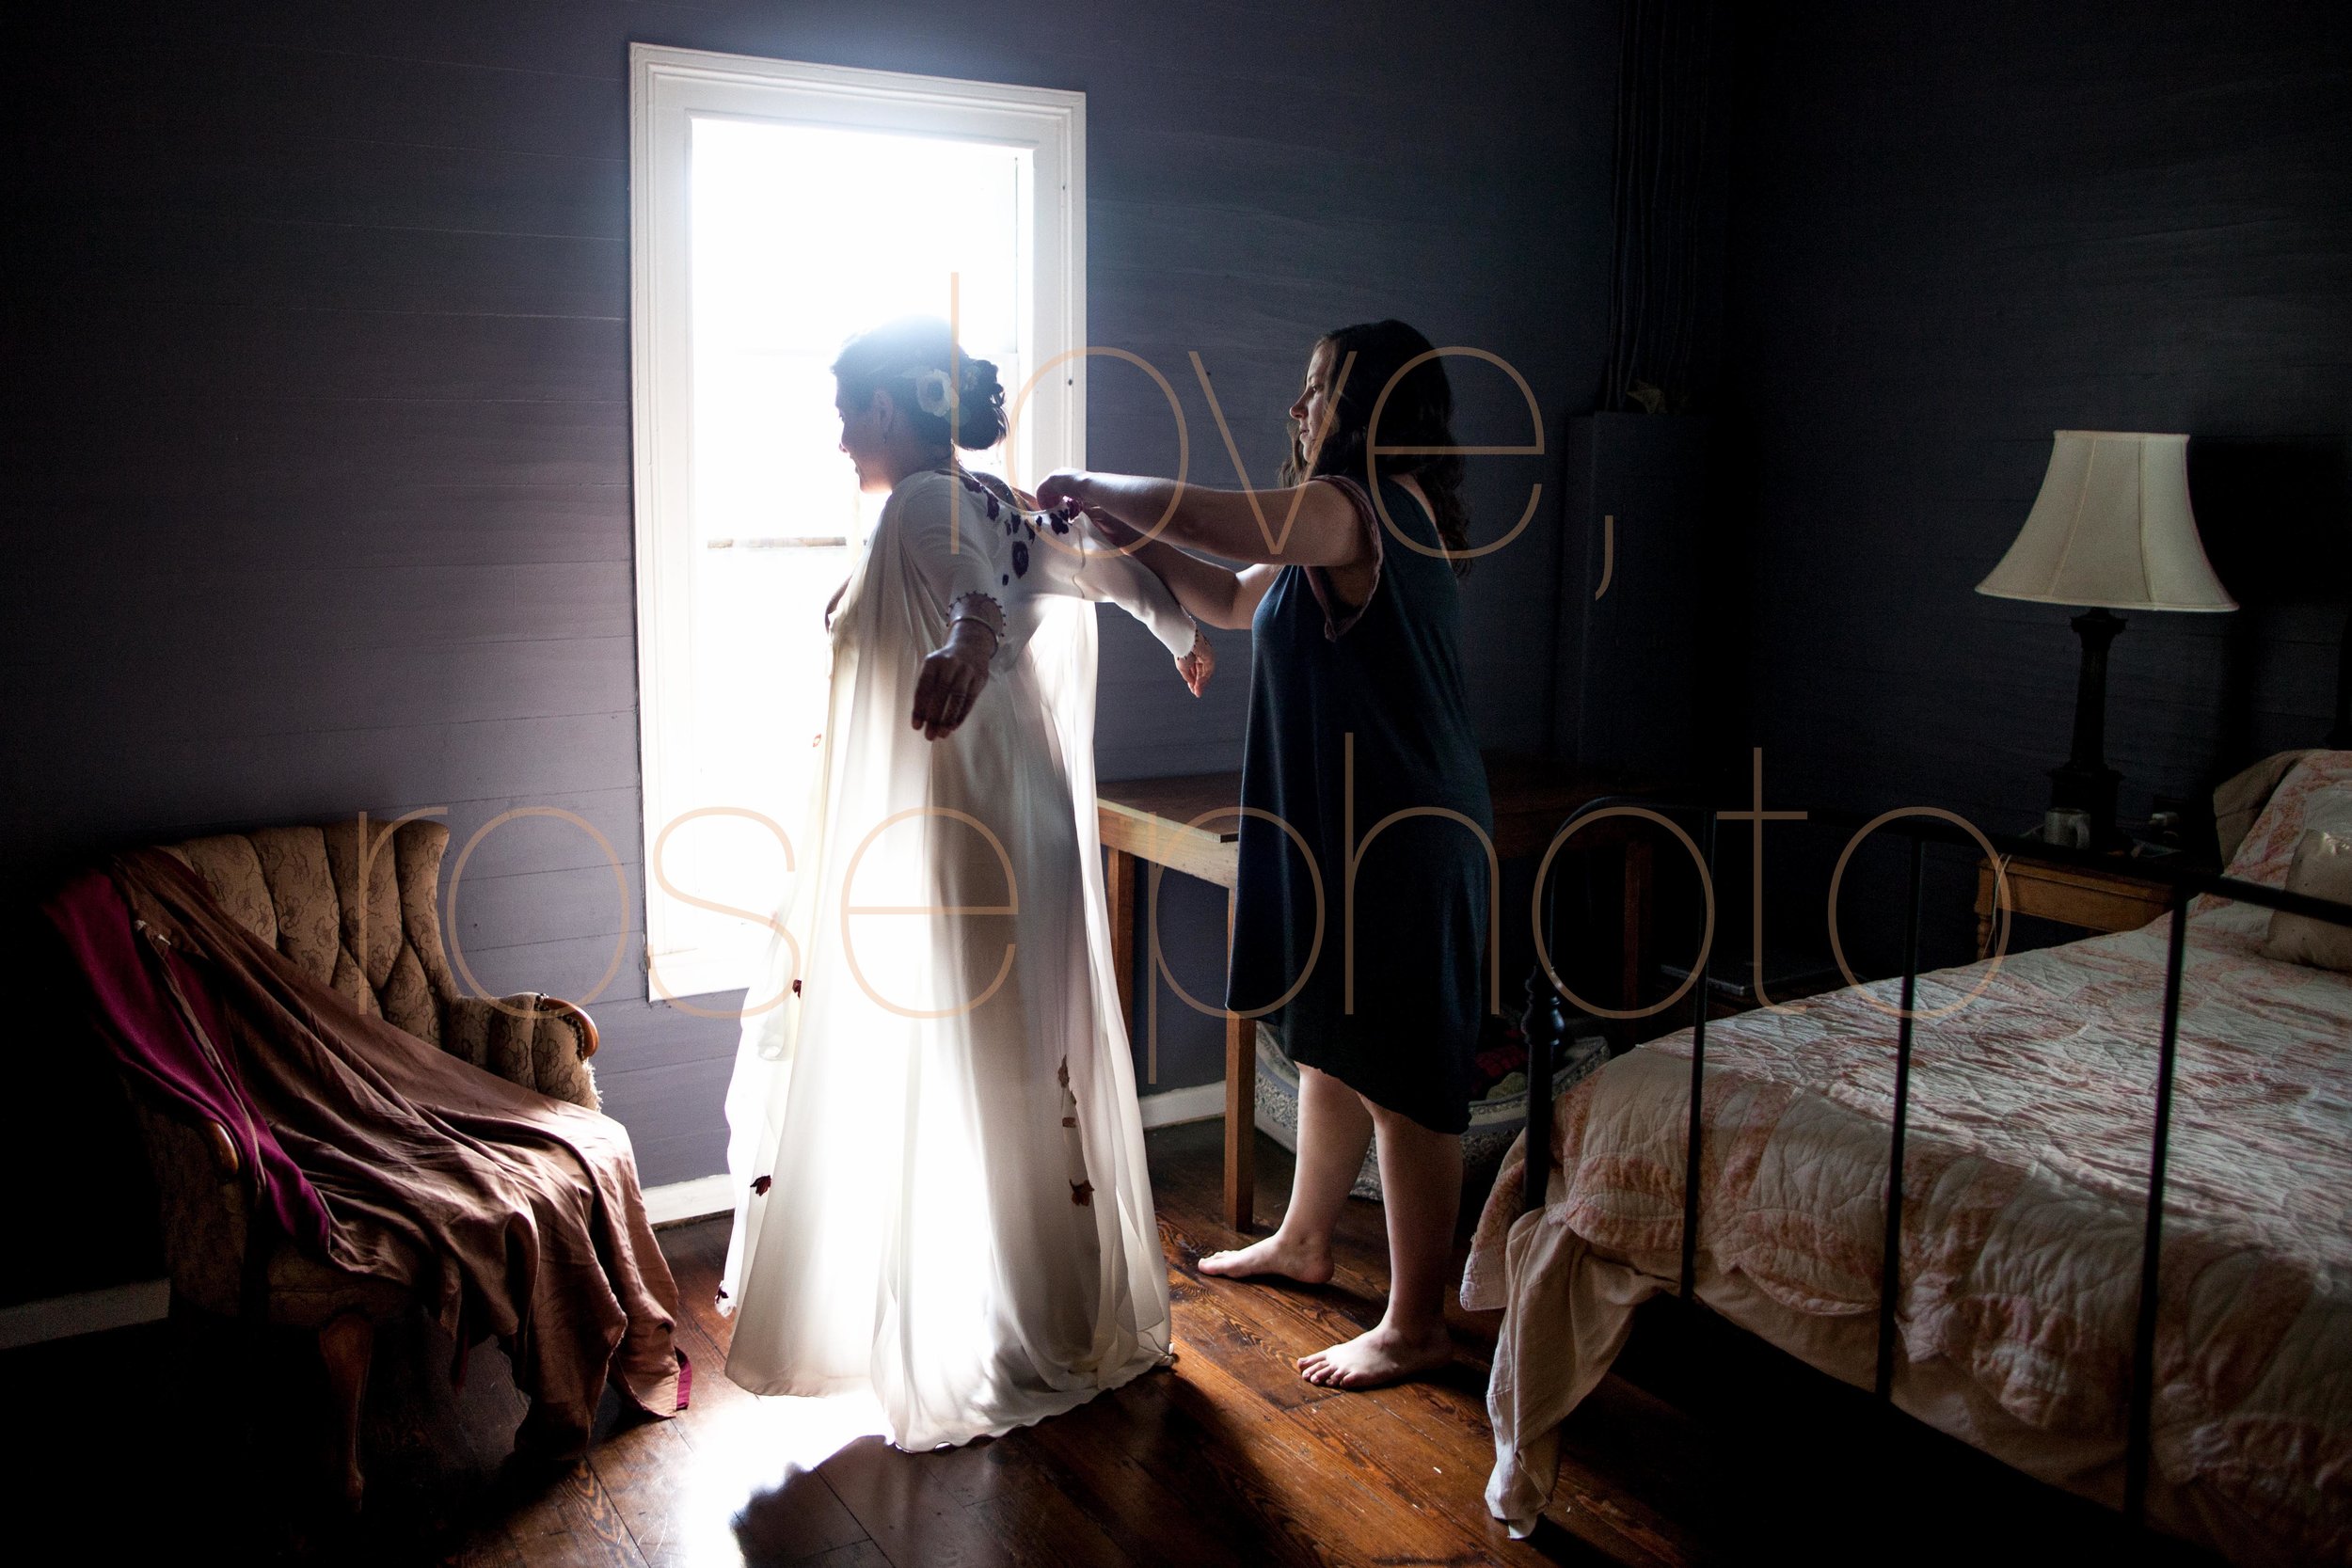 Jane Krame + Jason Ashevegas married asheville best wedding photographers -17.jpg